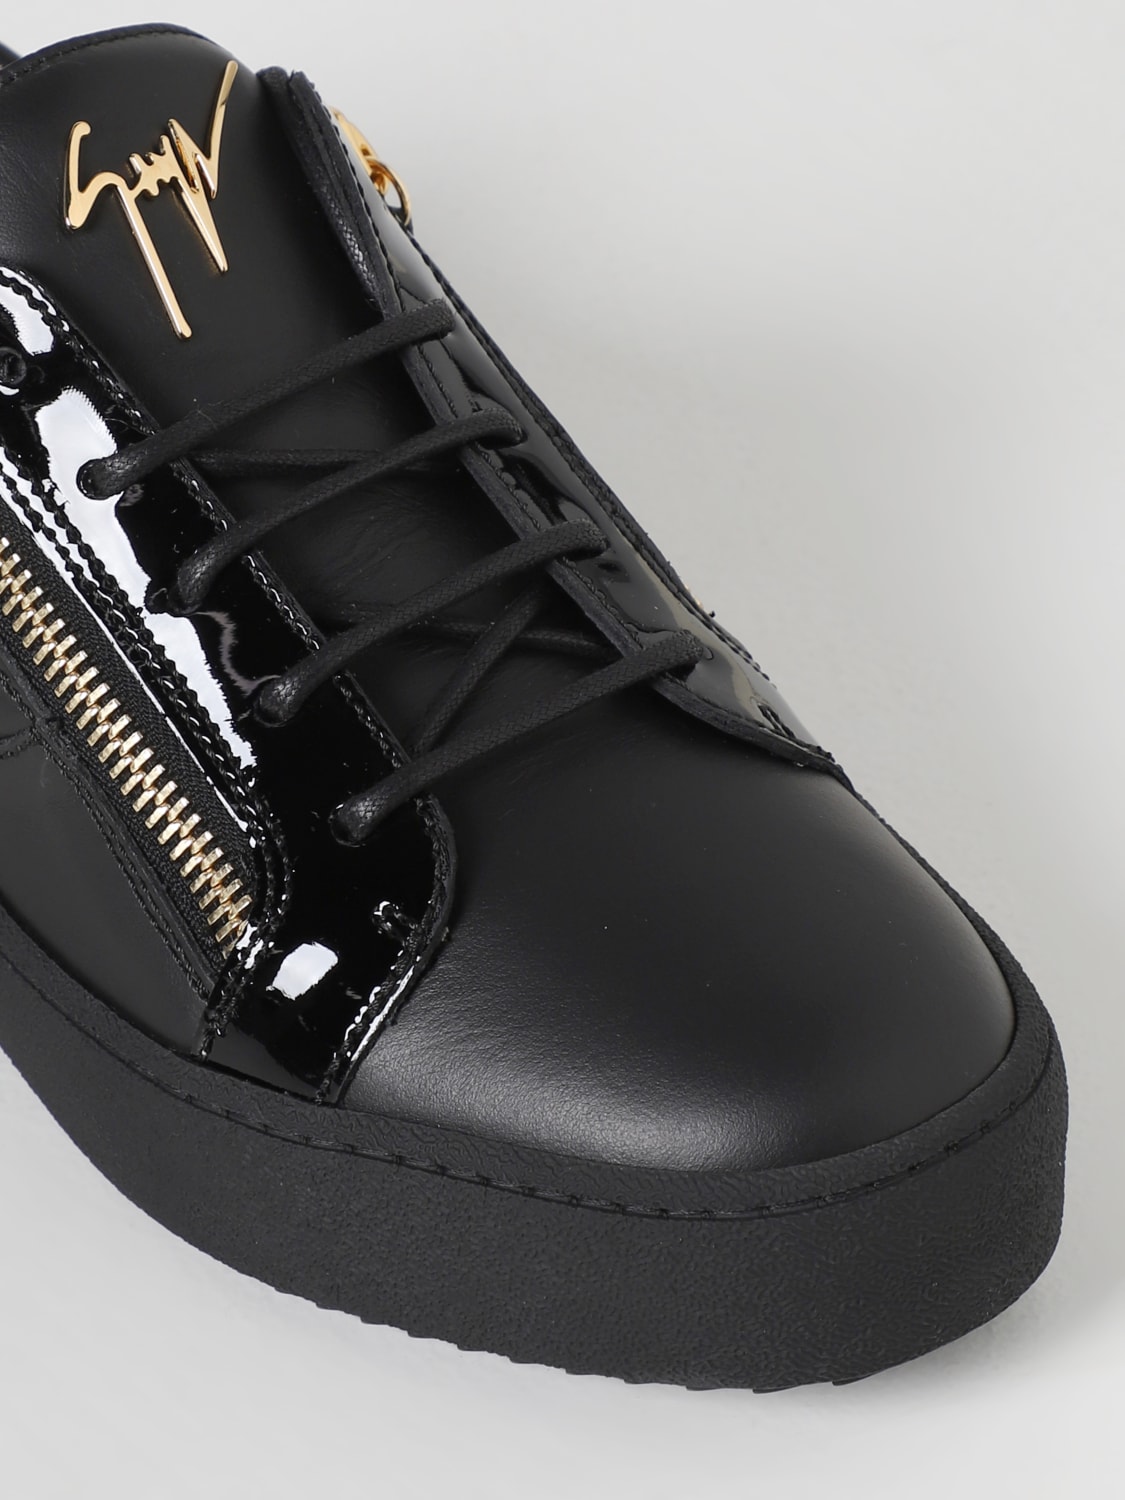 GIUSEPPE ZANOTTI: sneakers for man - Black | Giuseppe Zanotti RU00010 online on GIGLIO.COM